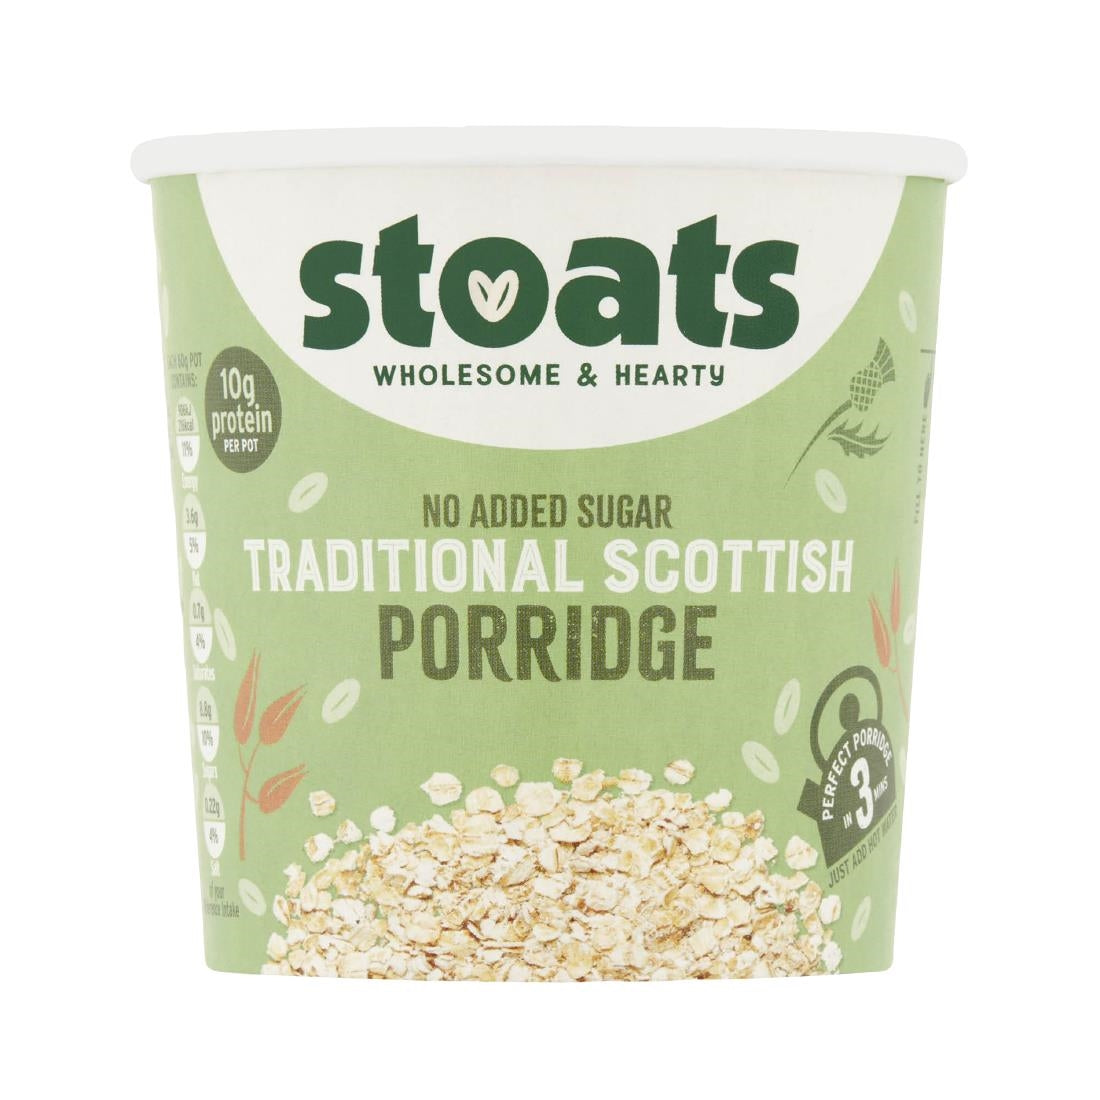 HS854 Stoats Classic Porridge Pots 60g (Pack of 16)